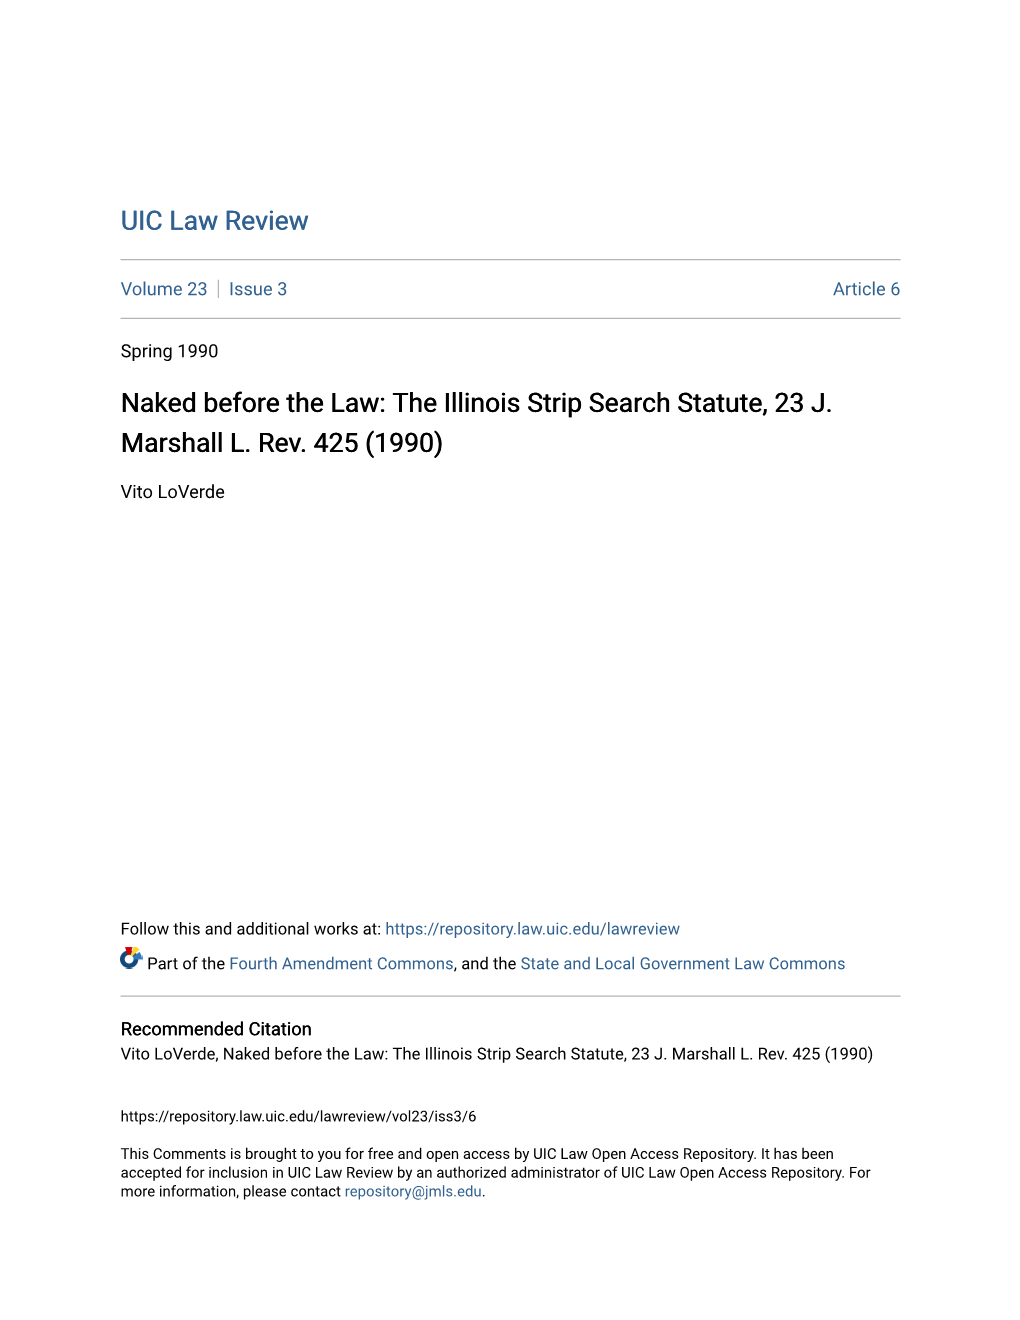 The Illinois Strip Search Statute, 23 J. Marshall L. Rev. 425 (1990)